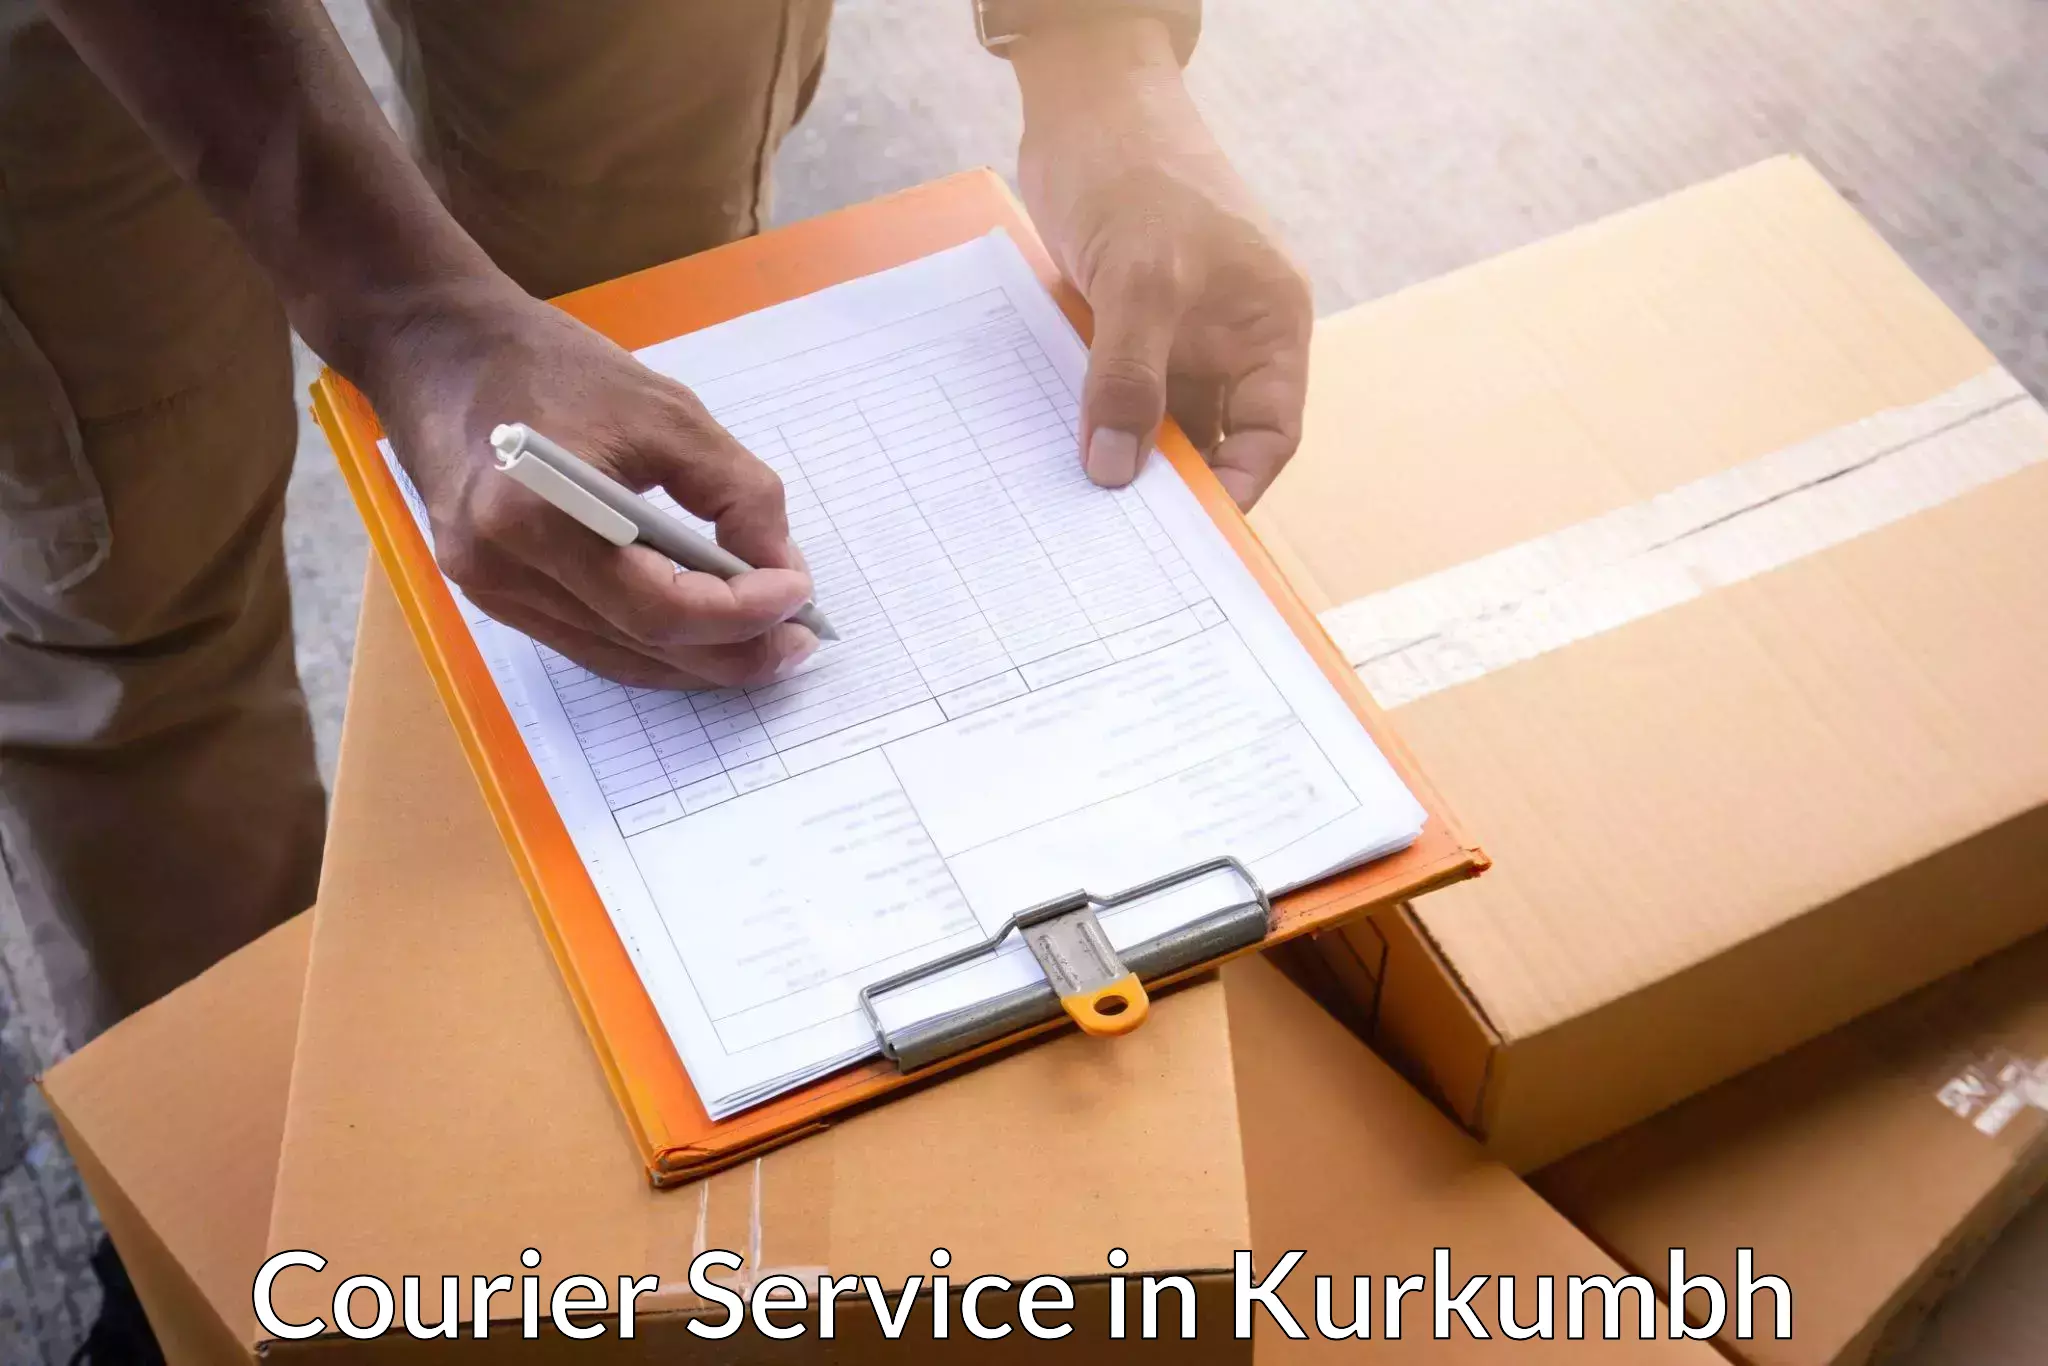 24-hour courier service in Kurkumbh